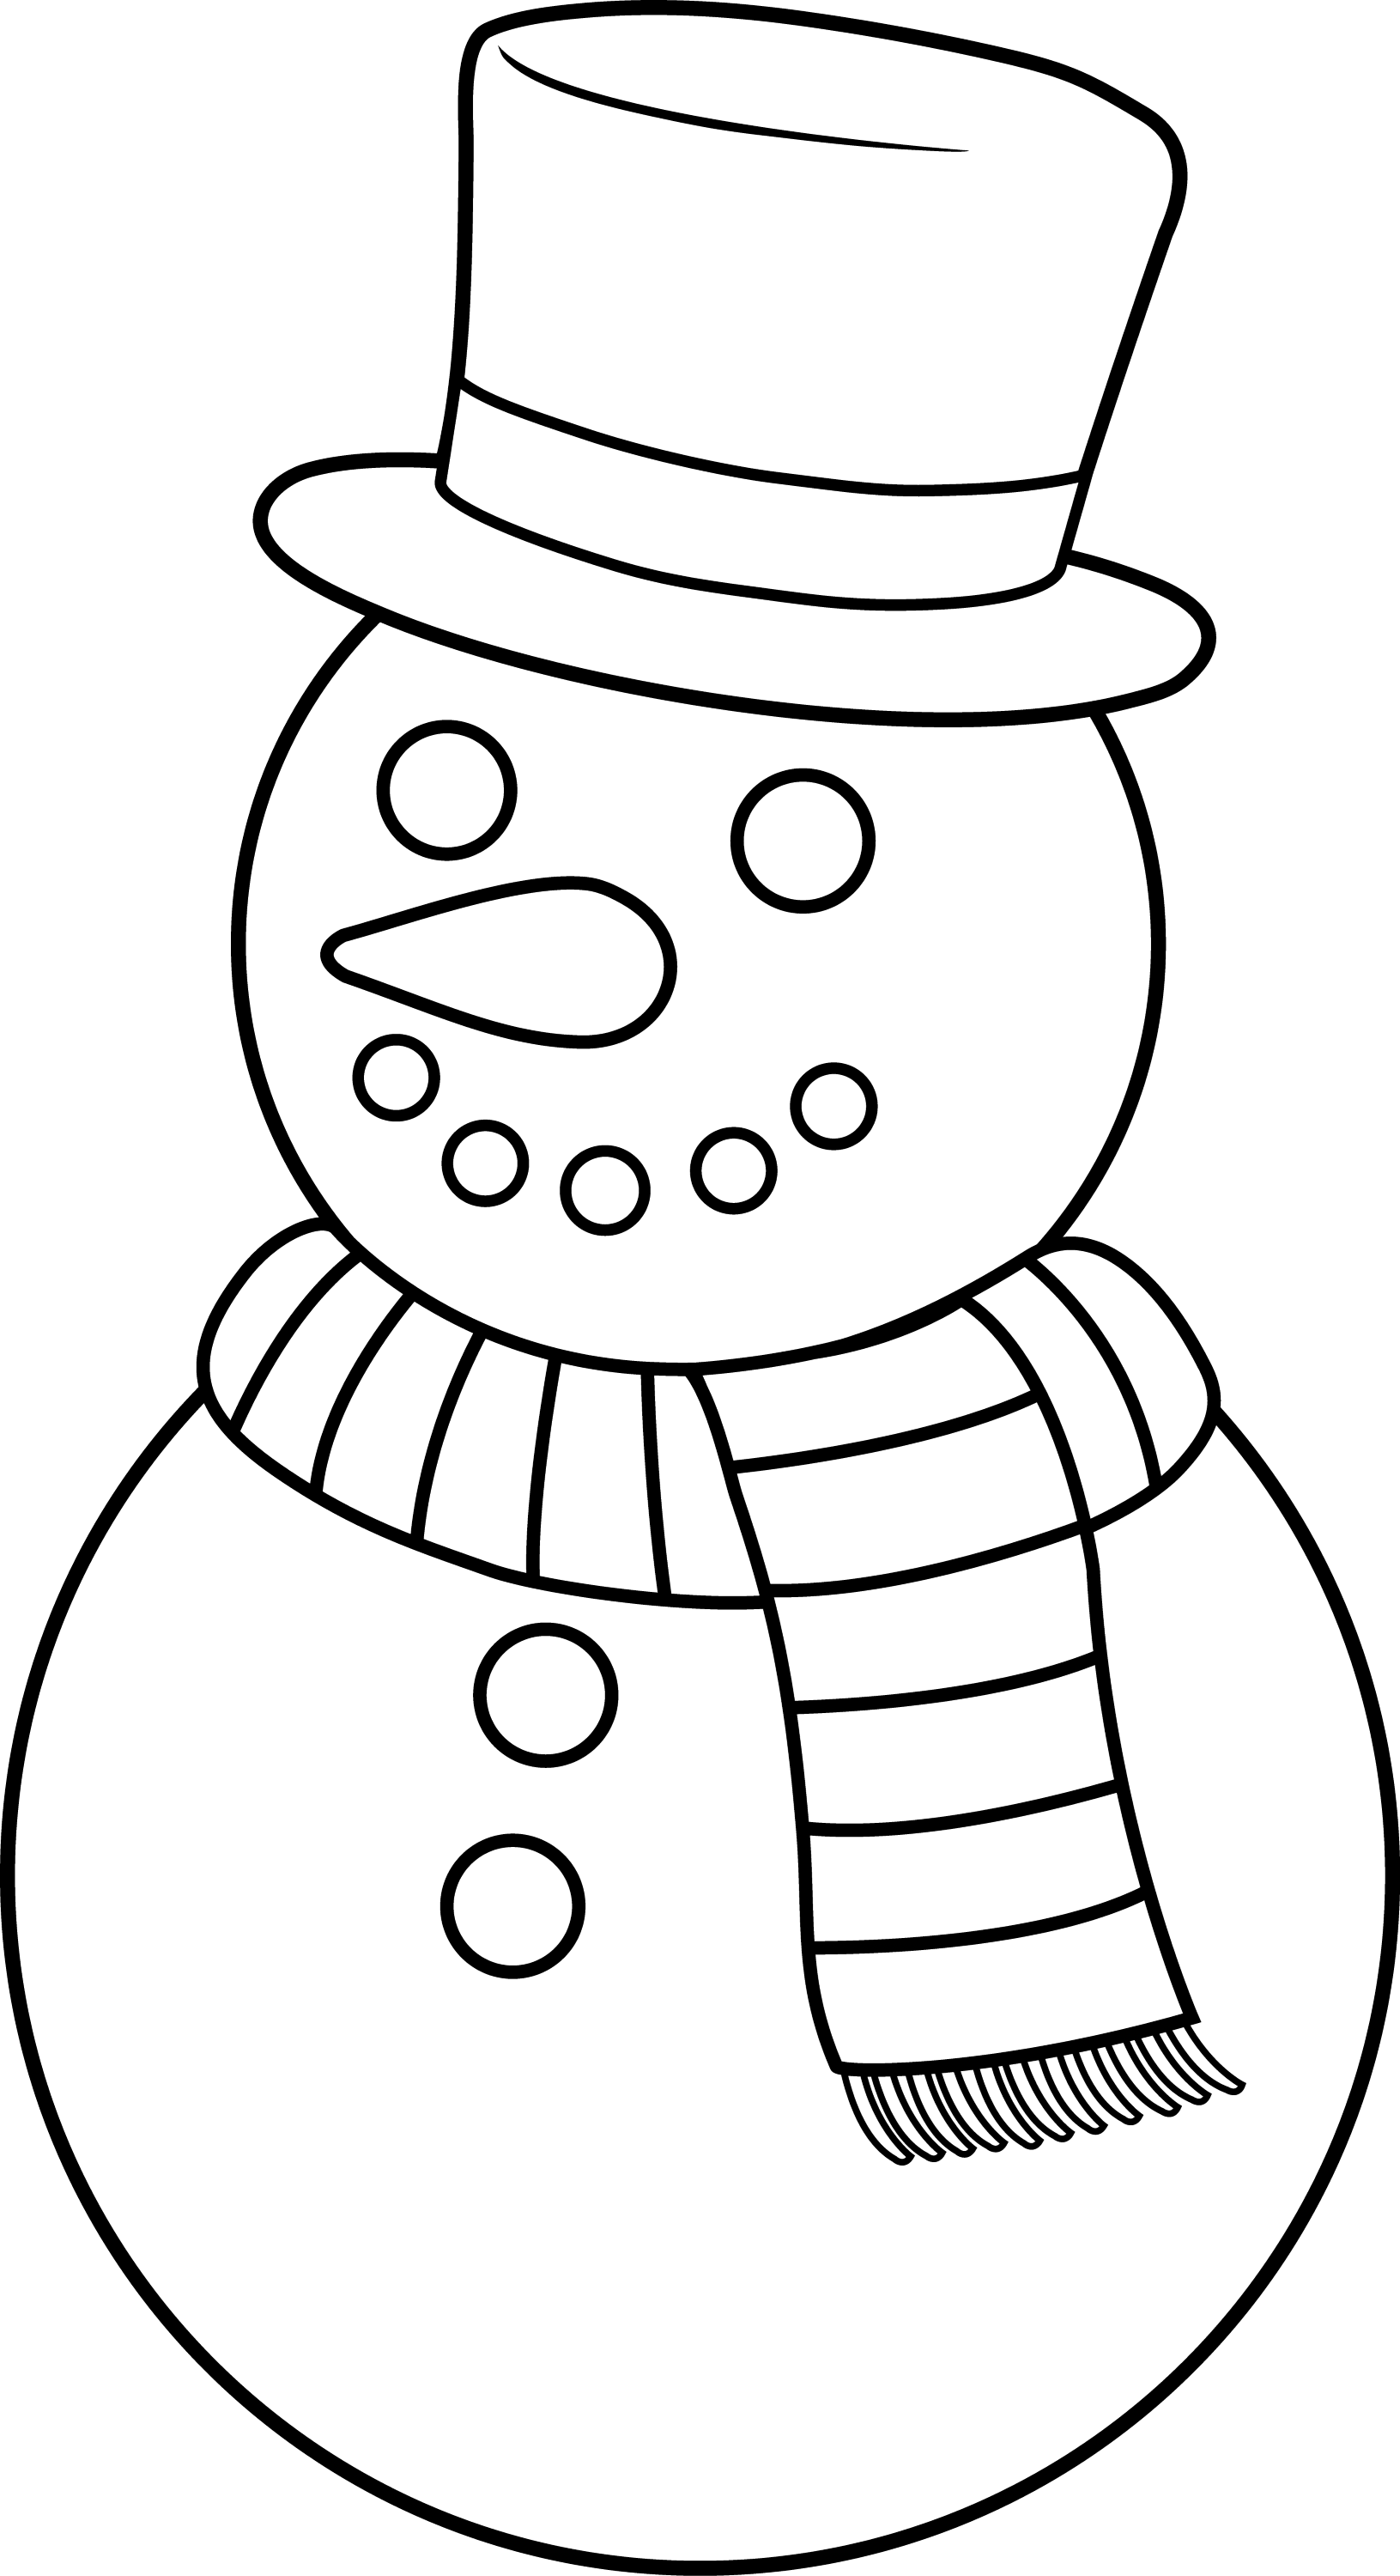 Colorable Christmas Snowman Free Clip Art